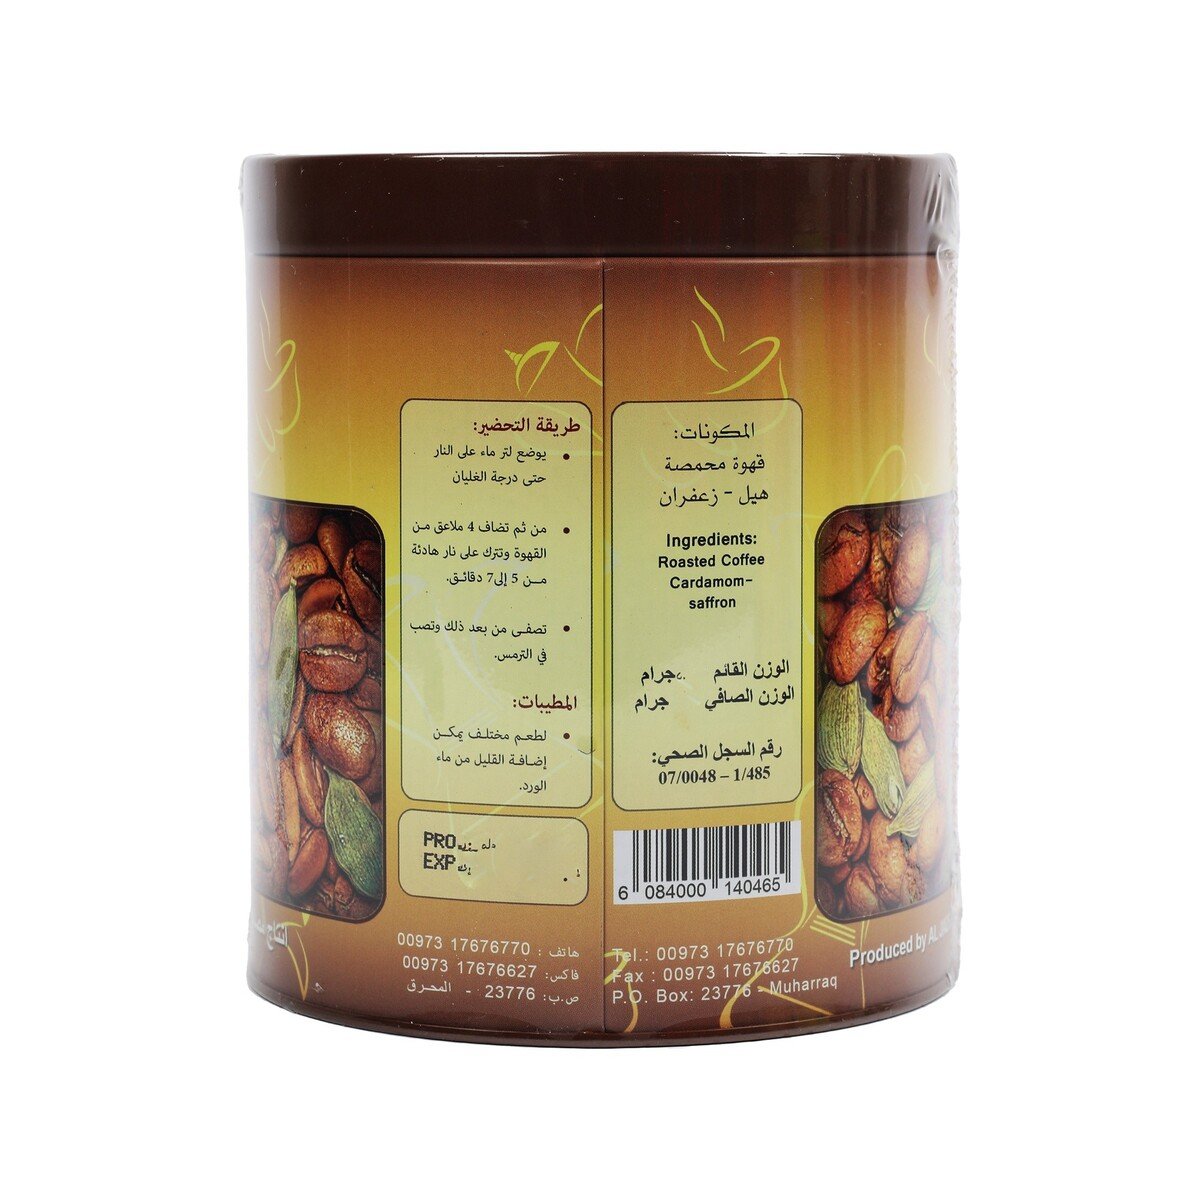 Al Jazeera Arabic Coffee 180 g